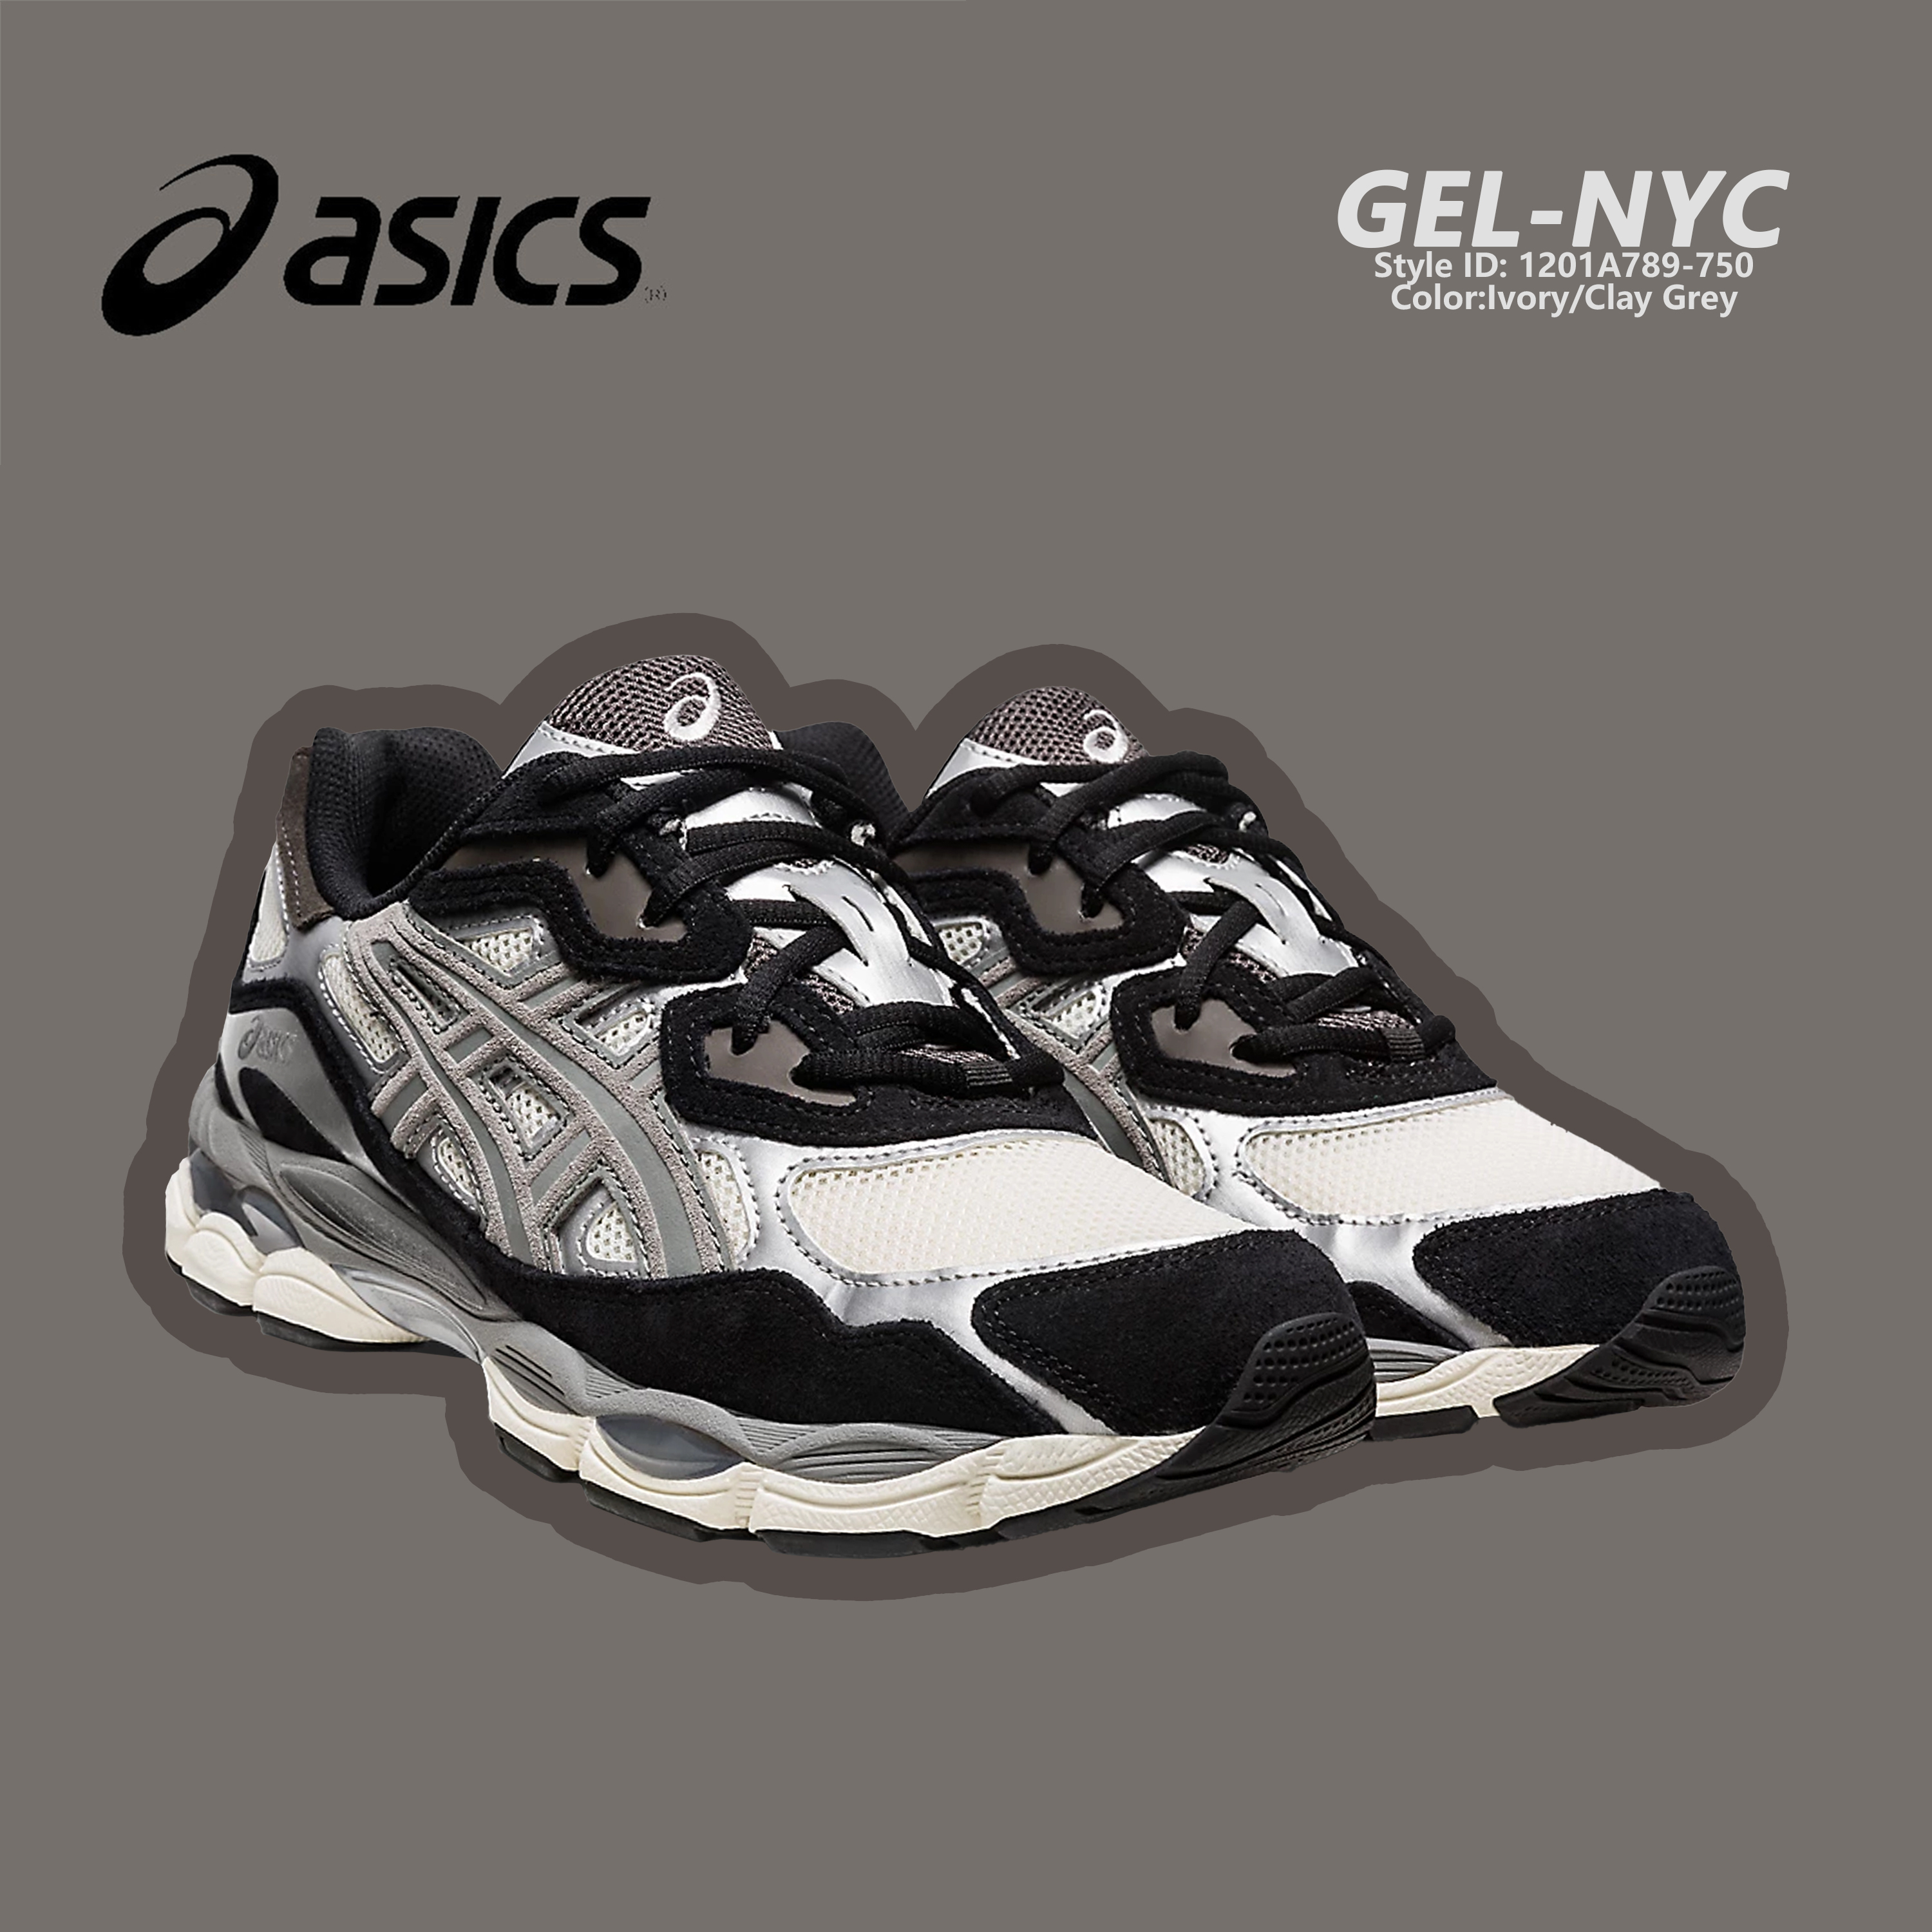 ASICS GEL-NYC / Black Ivory Grey